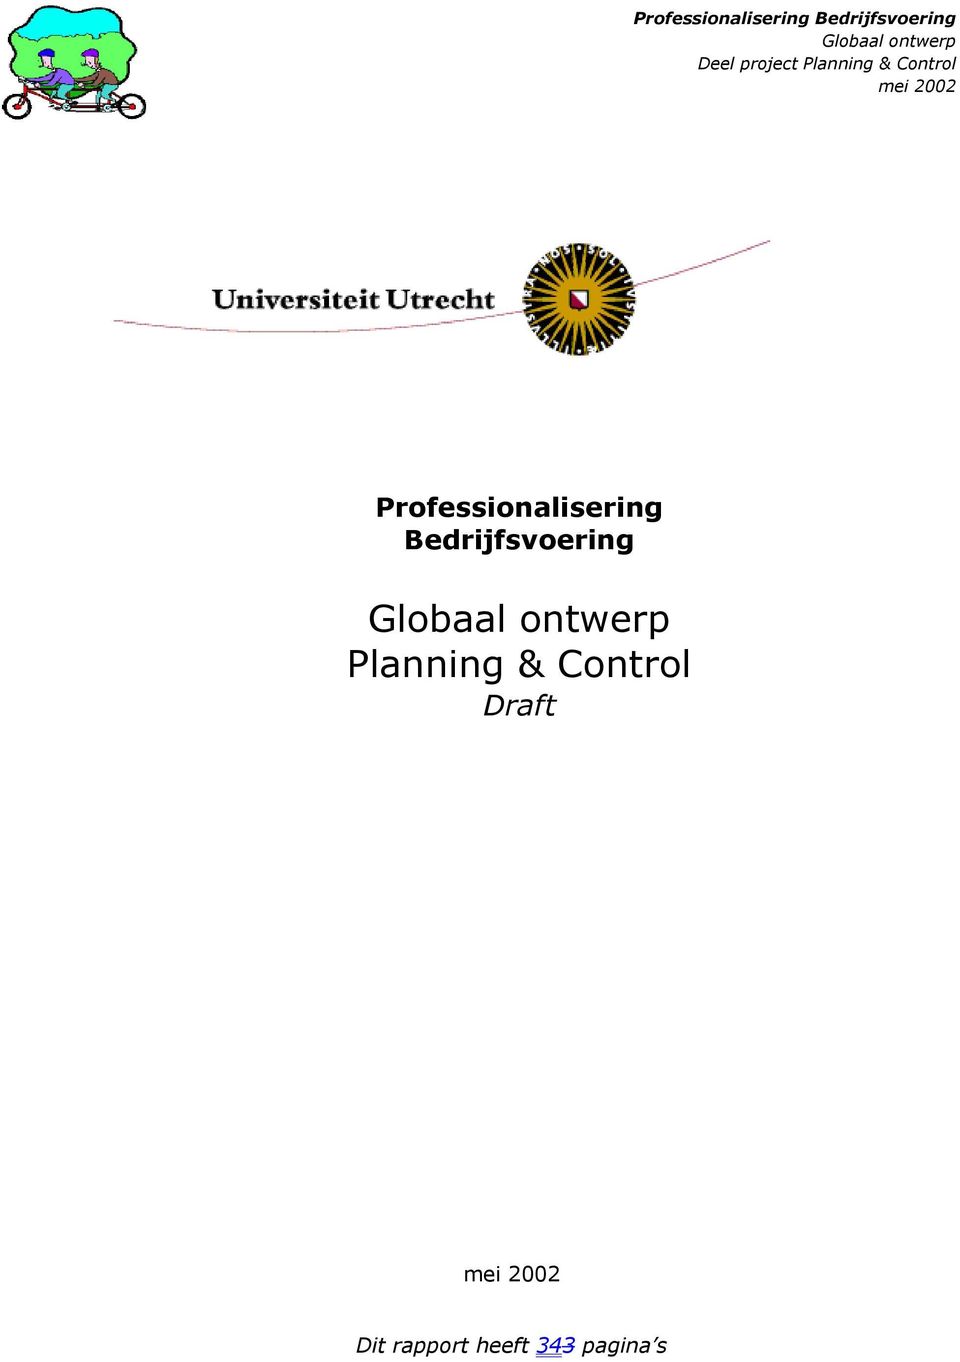 Planning & Control